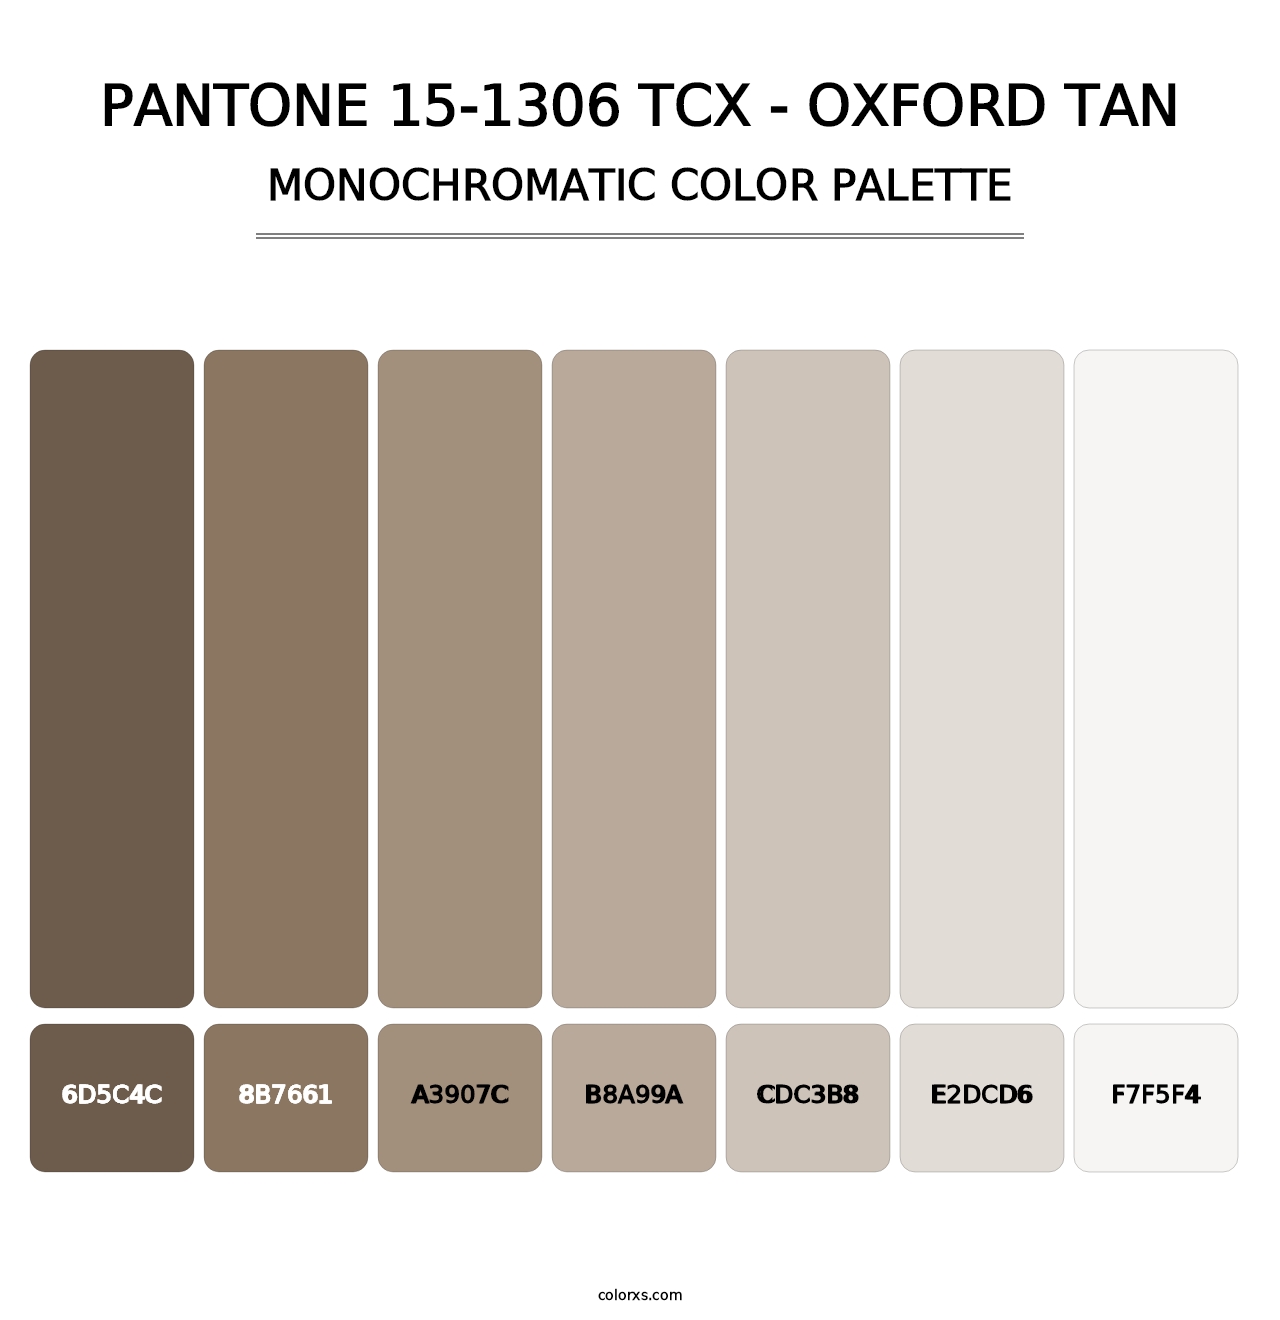 PANTONE 15-1306 TCX - Oxford Tan - Monochromatic Color Palette